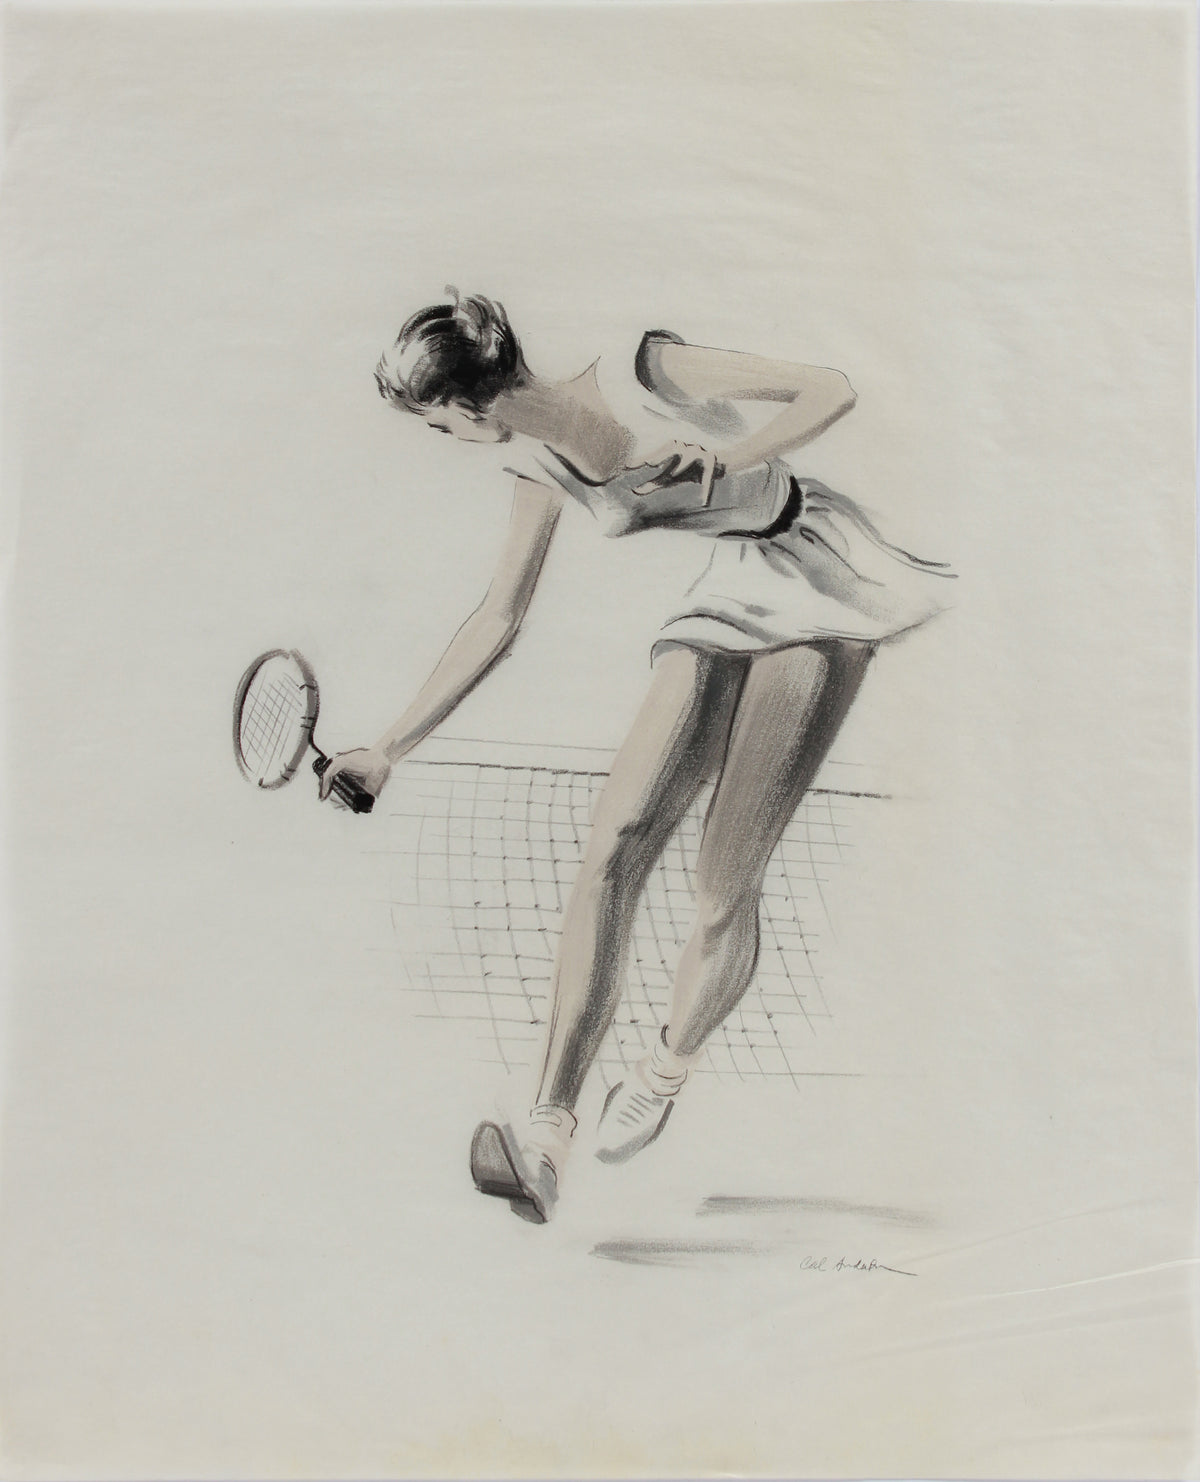 Female Tennis Player in Motion &lt;br&gt;1950-60s Charcoal &amp; Pastel &lt;br&gt;&lt;br&gt;#A9033